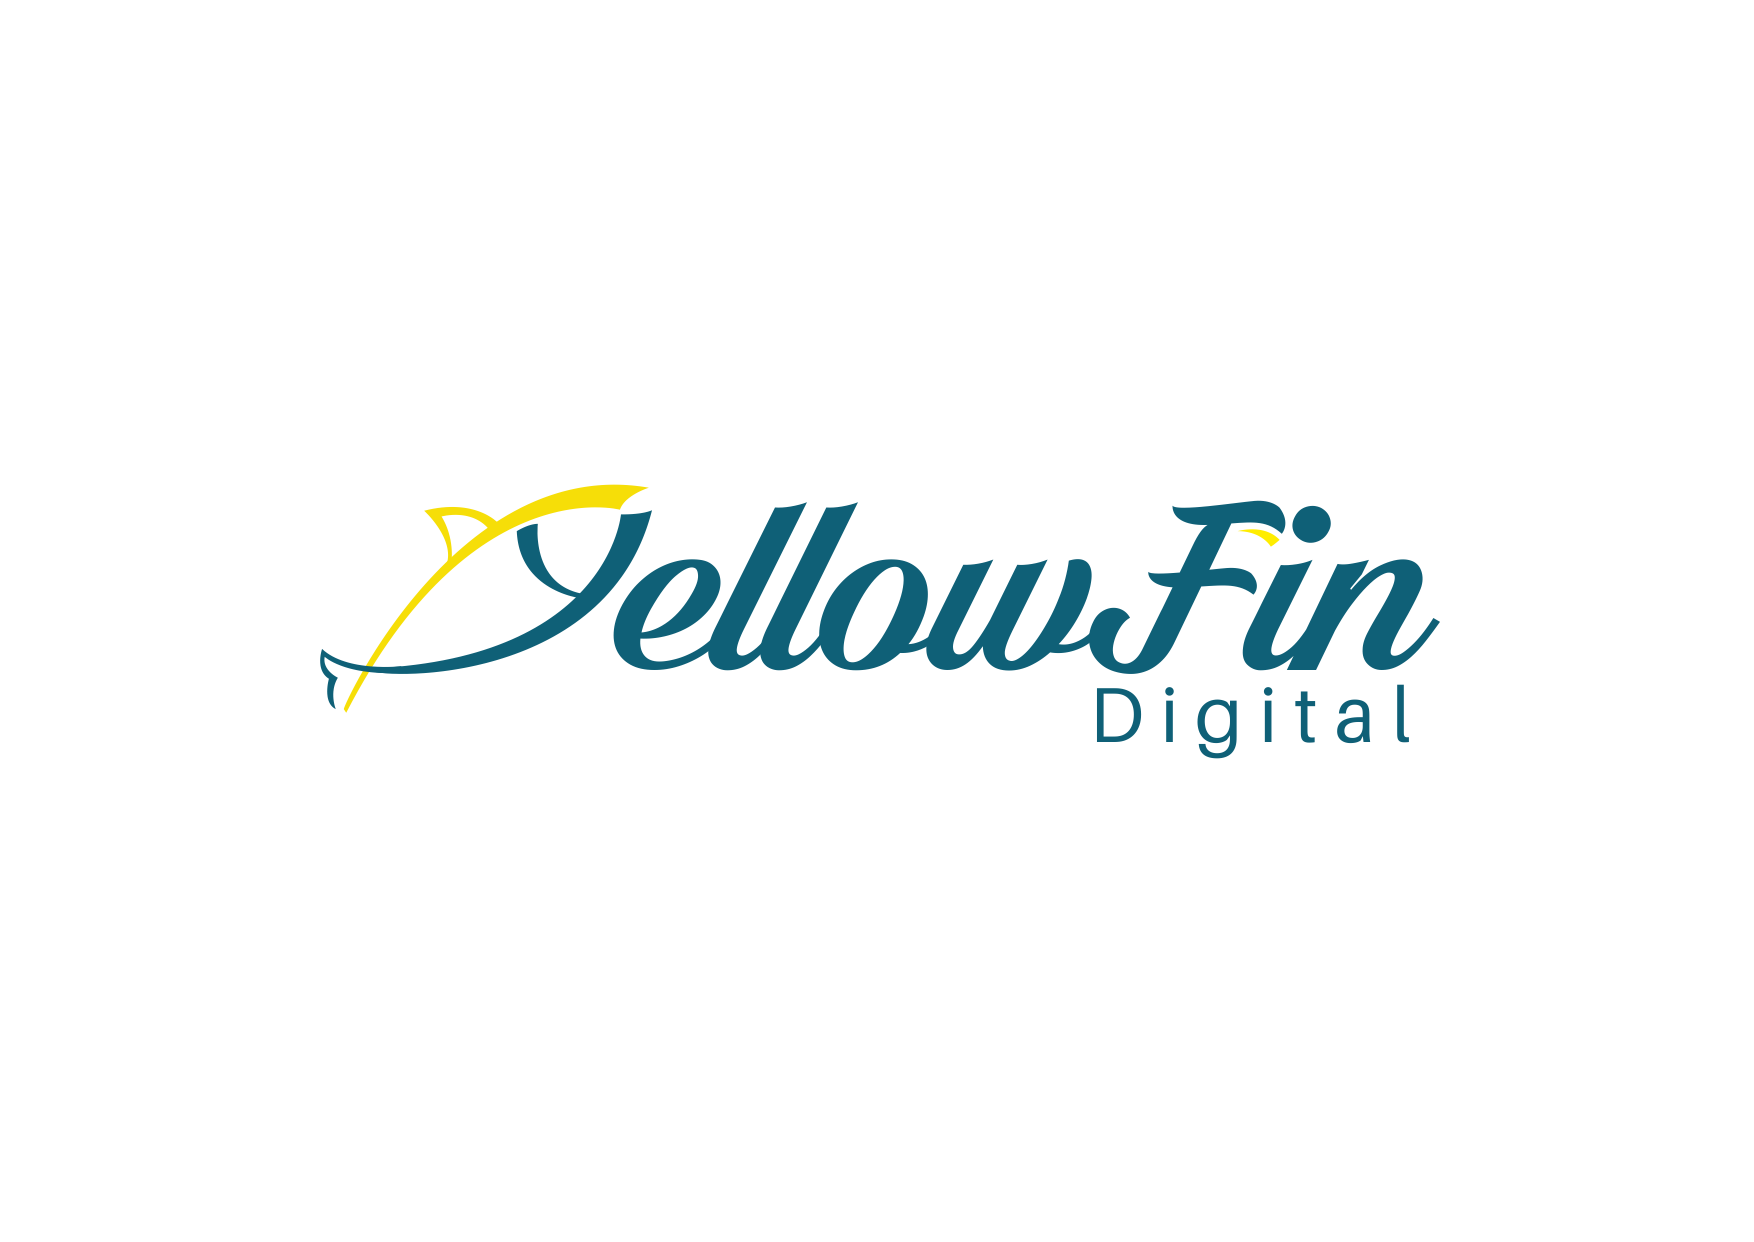 Top SMM Firm Logo: YellowFin Digital